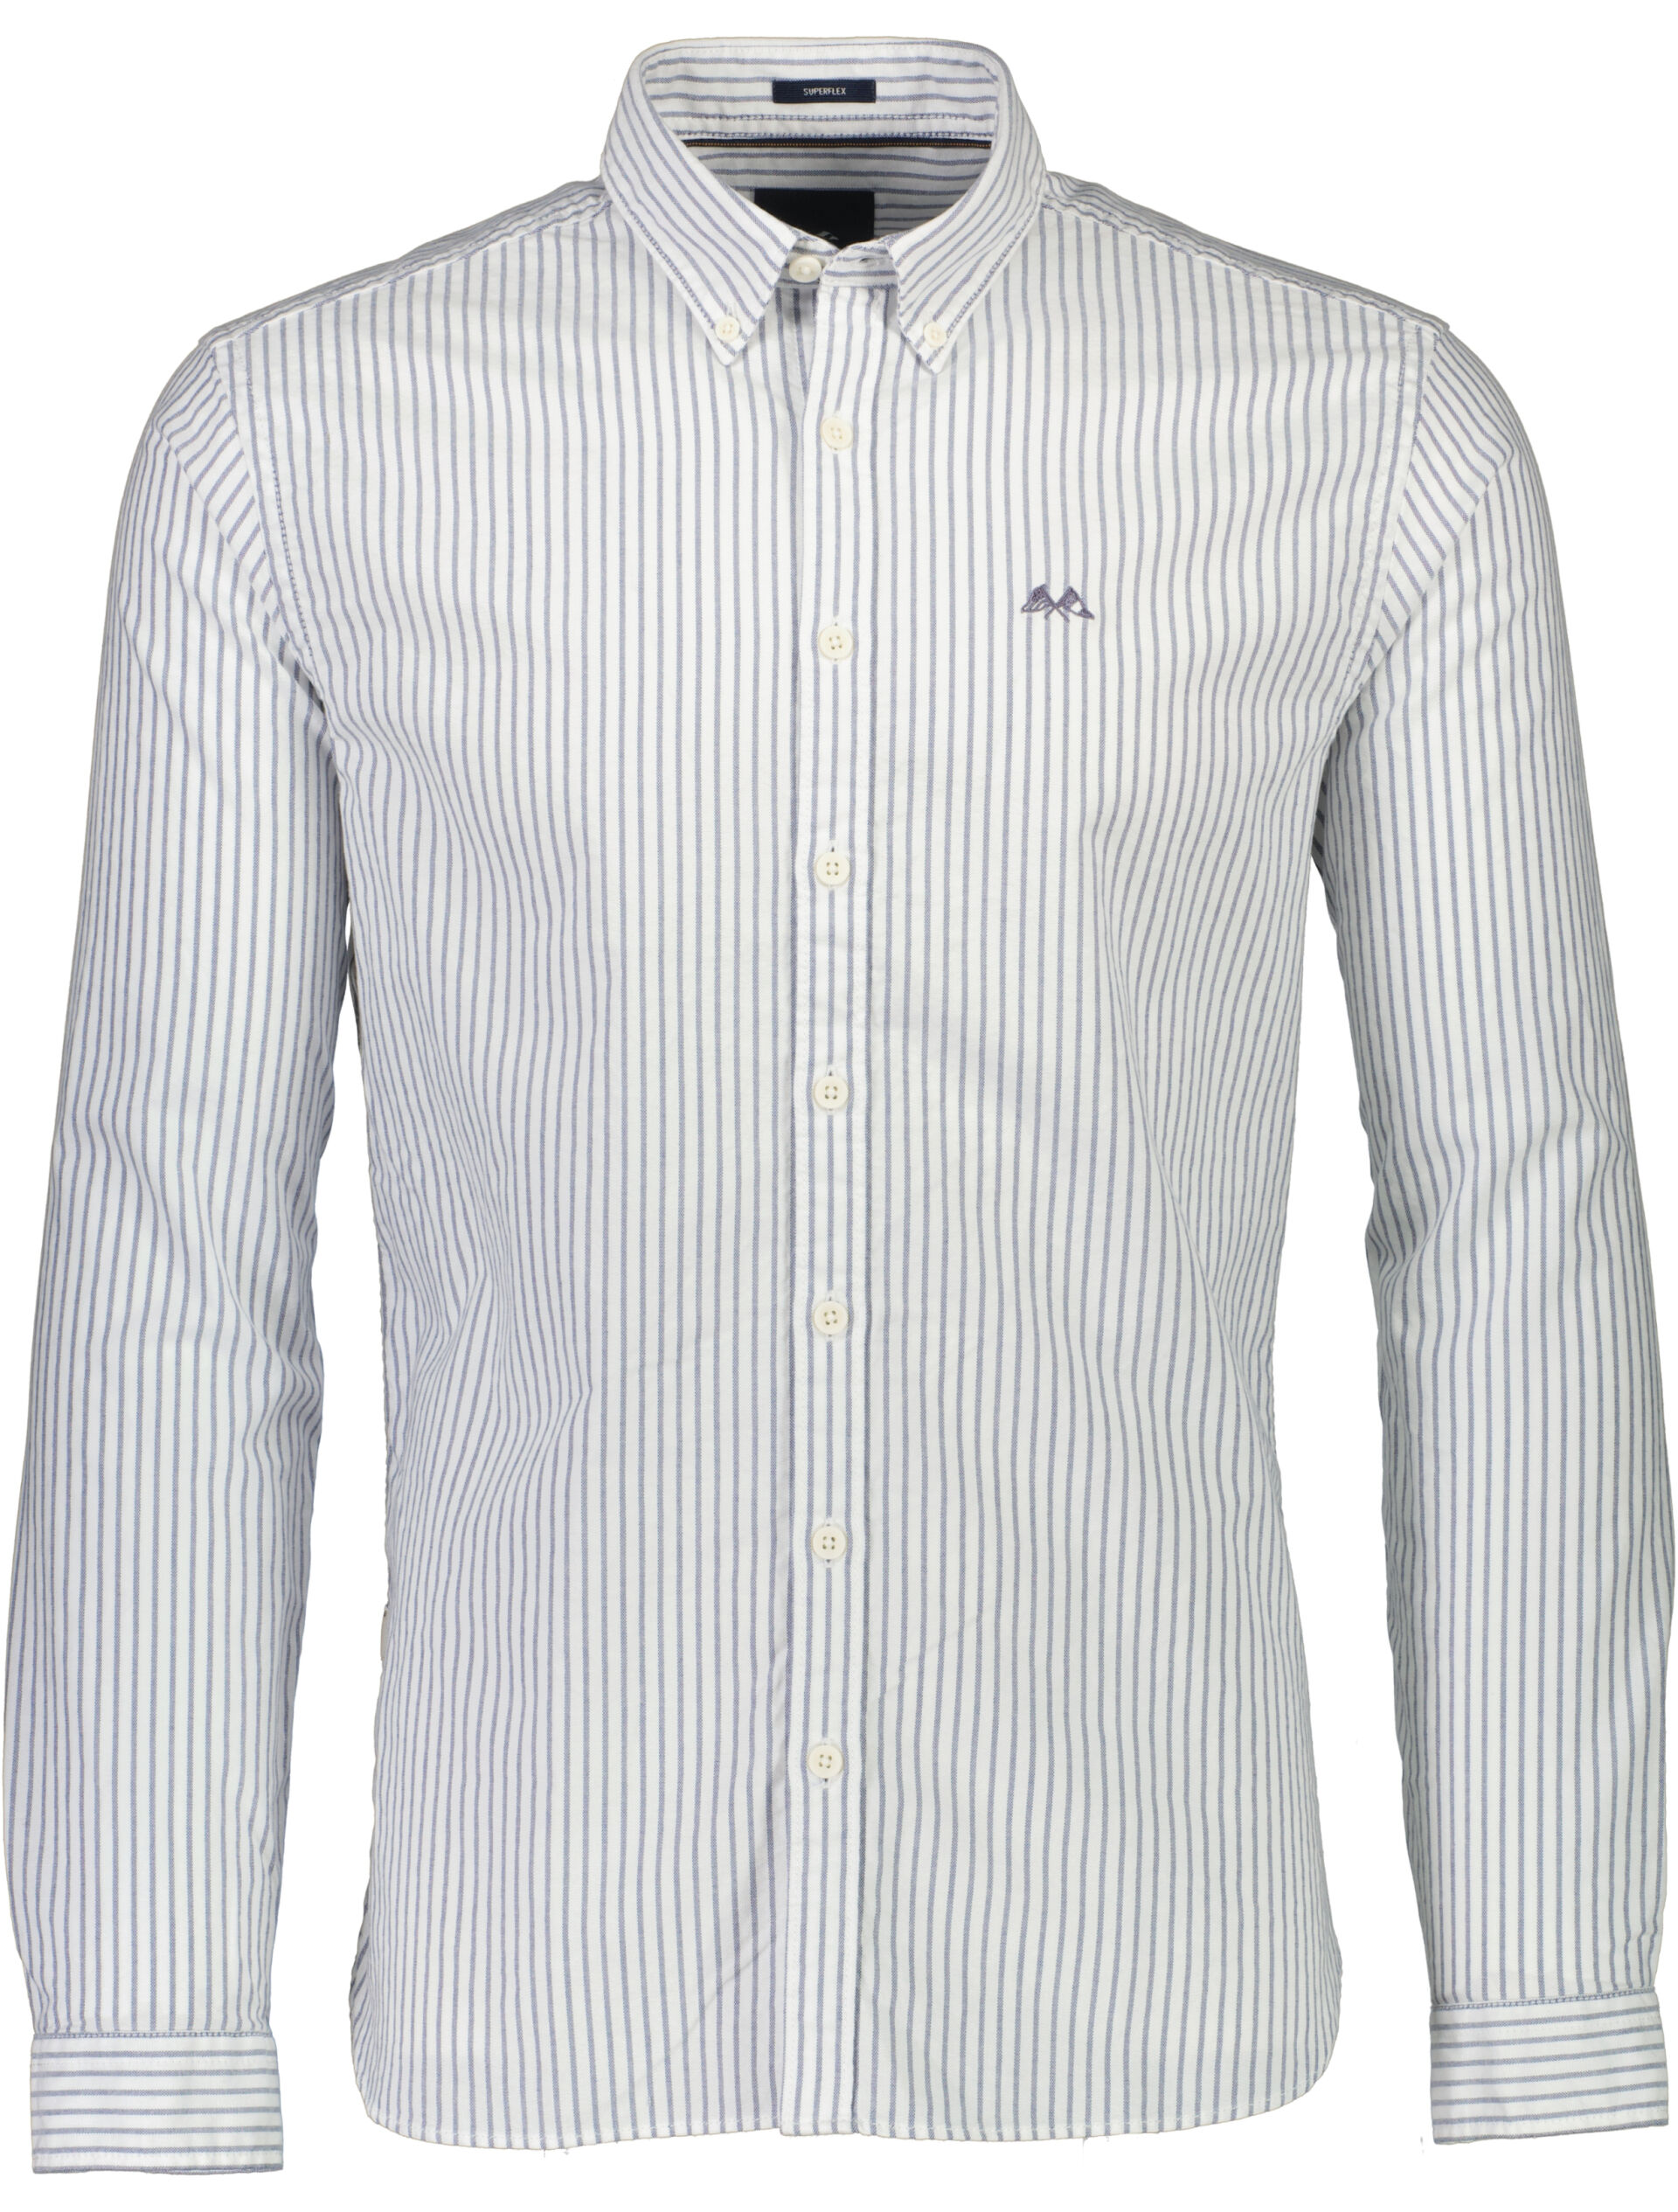 Oxford shirt 30-220114